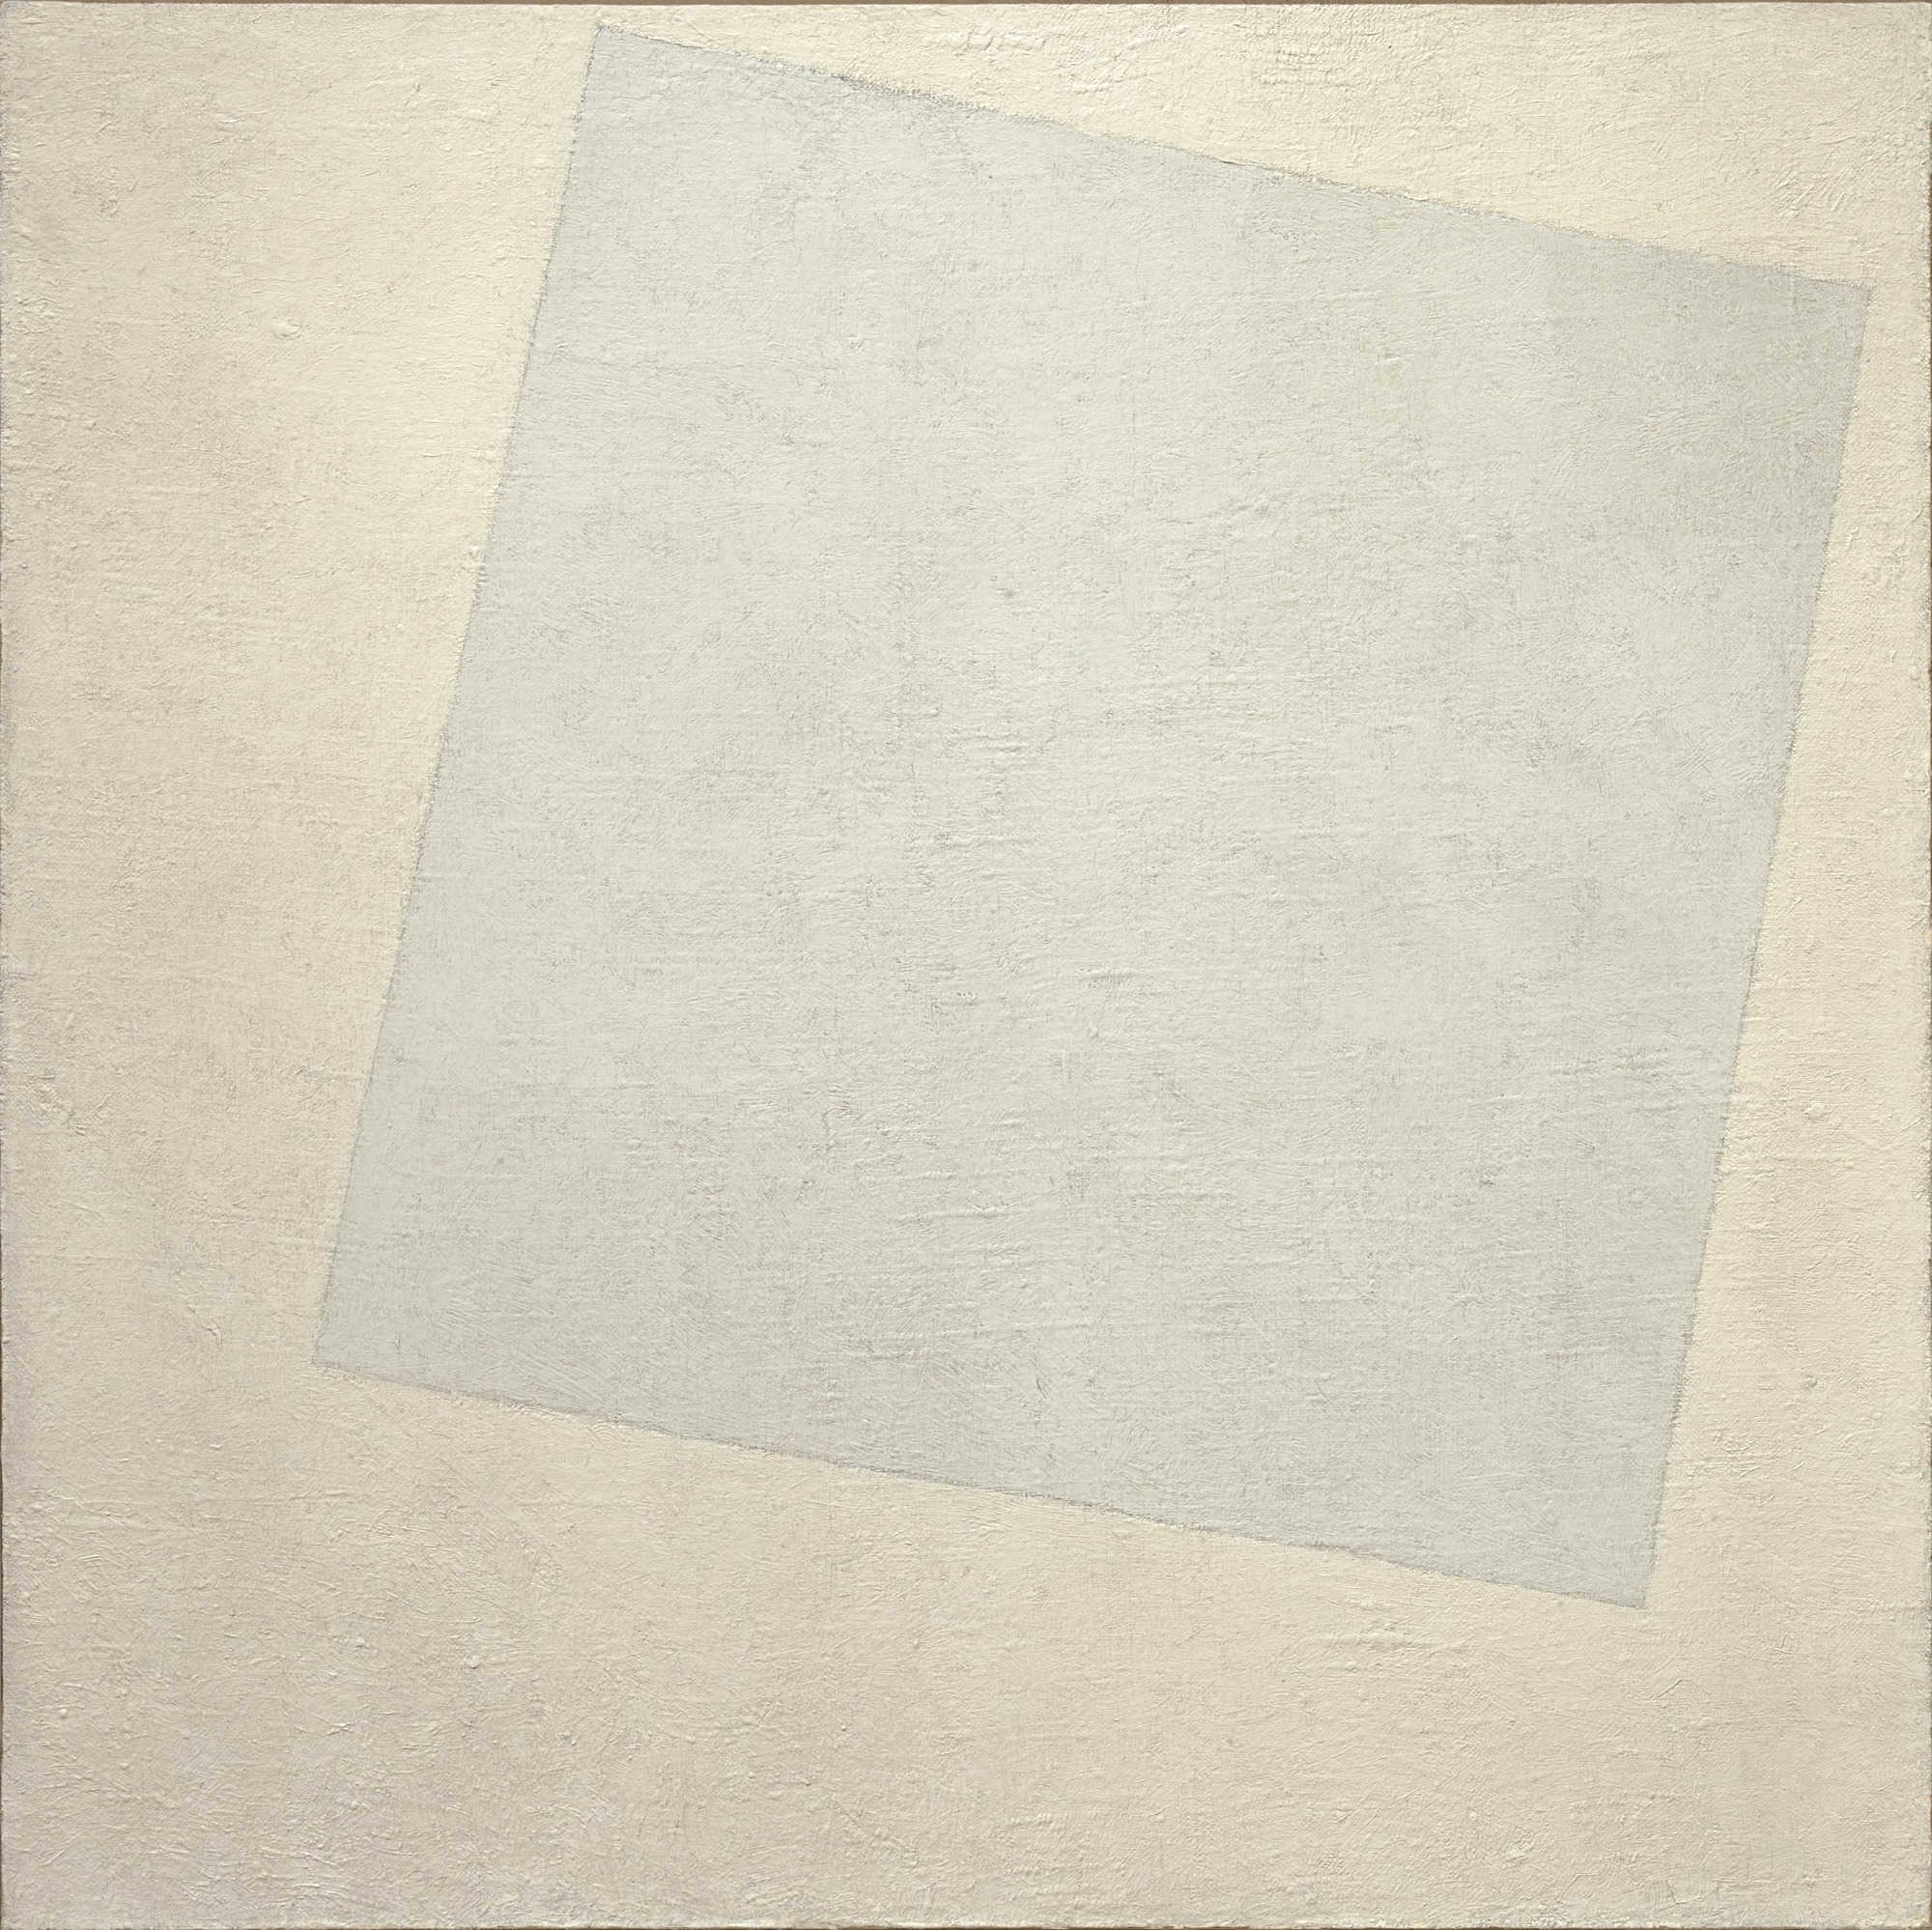 Kazimir_Malevich, Suprematist Composition: White on White (1918)